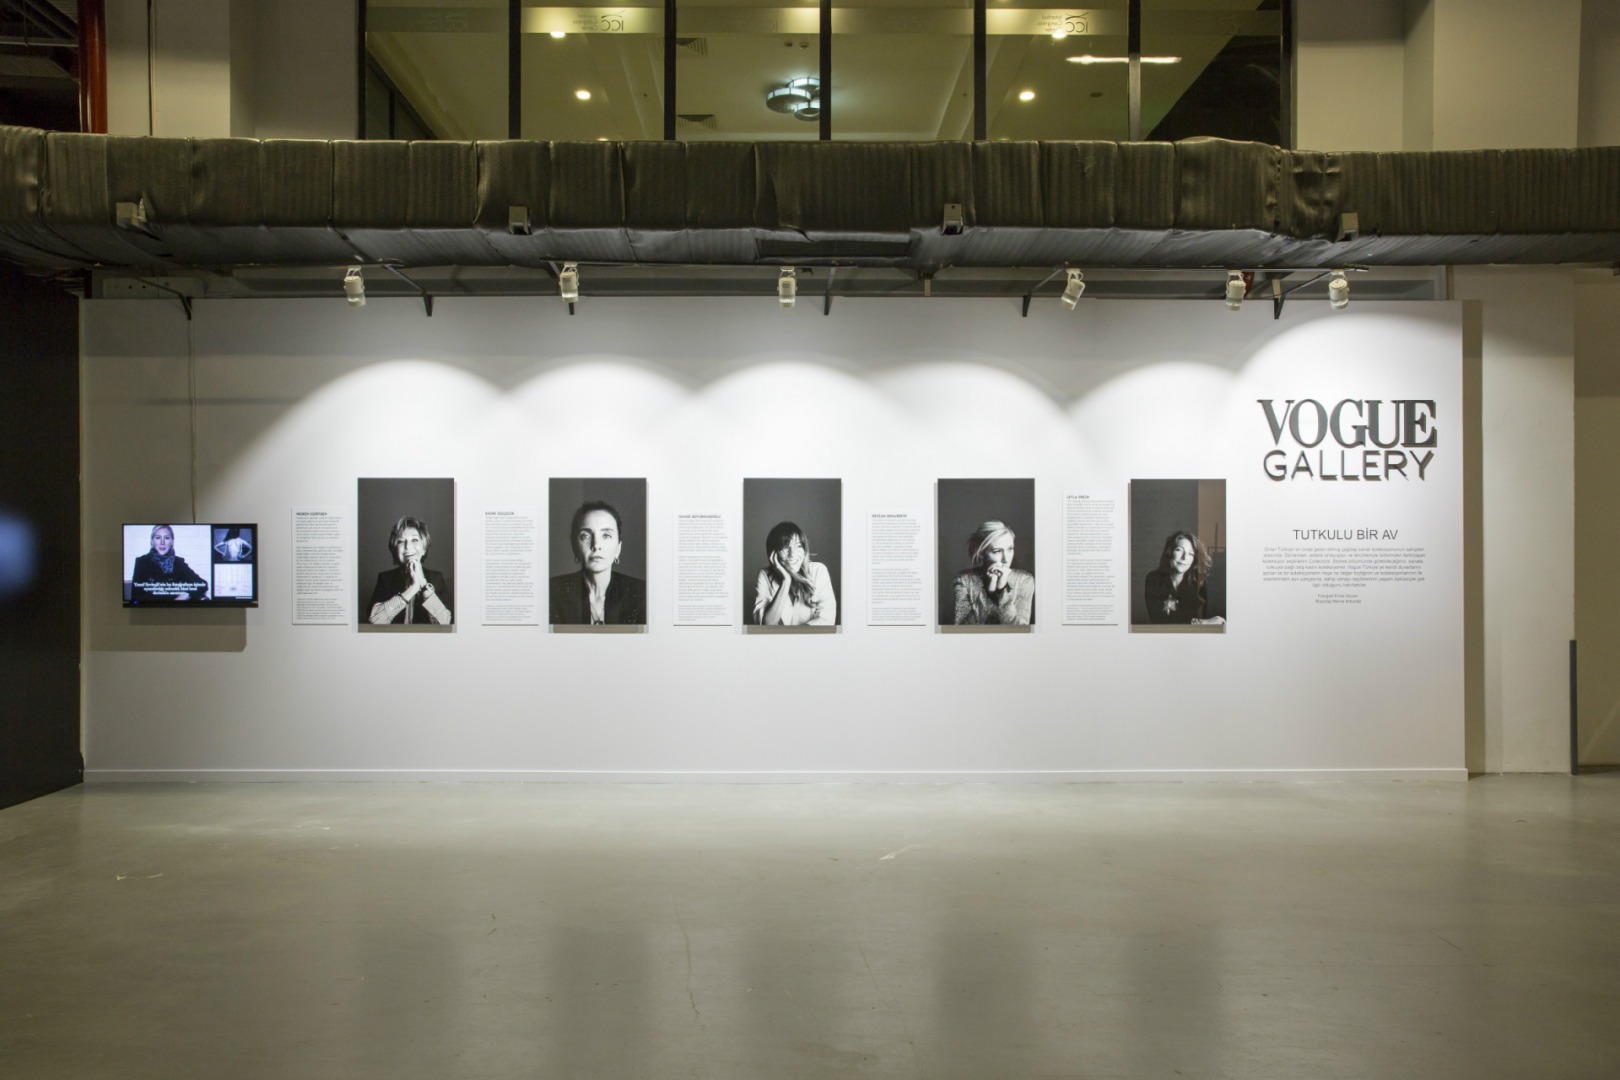 Vogue Gallery: Tutkulu Bir Av